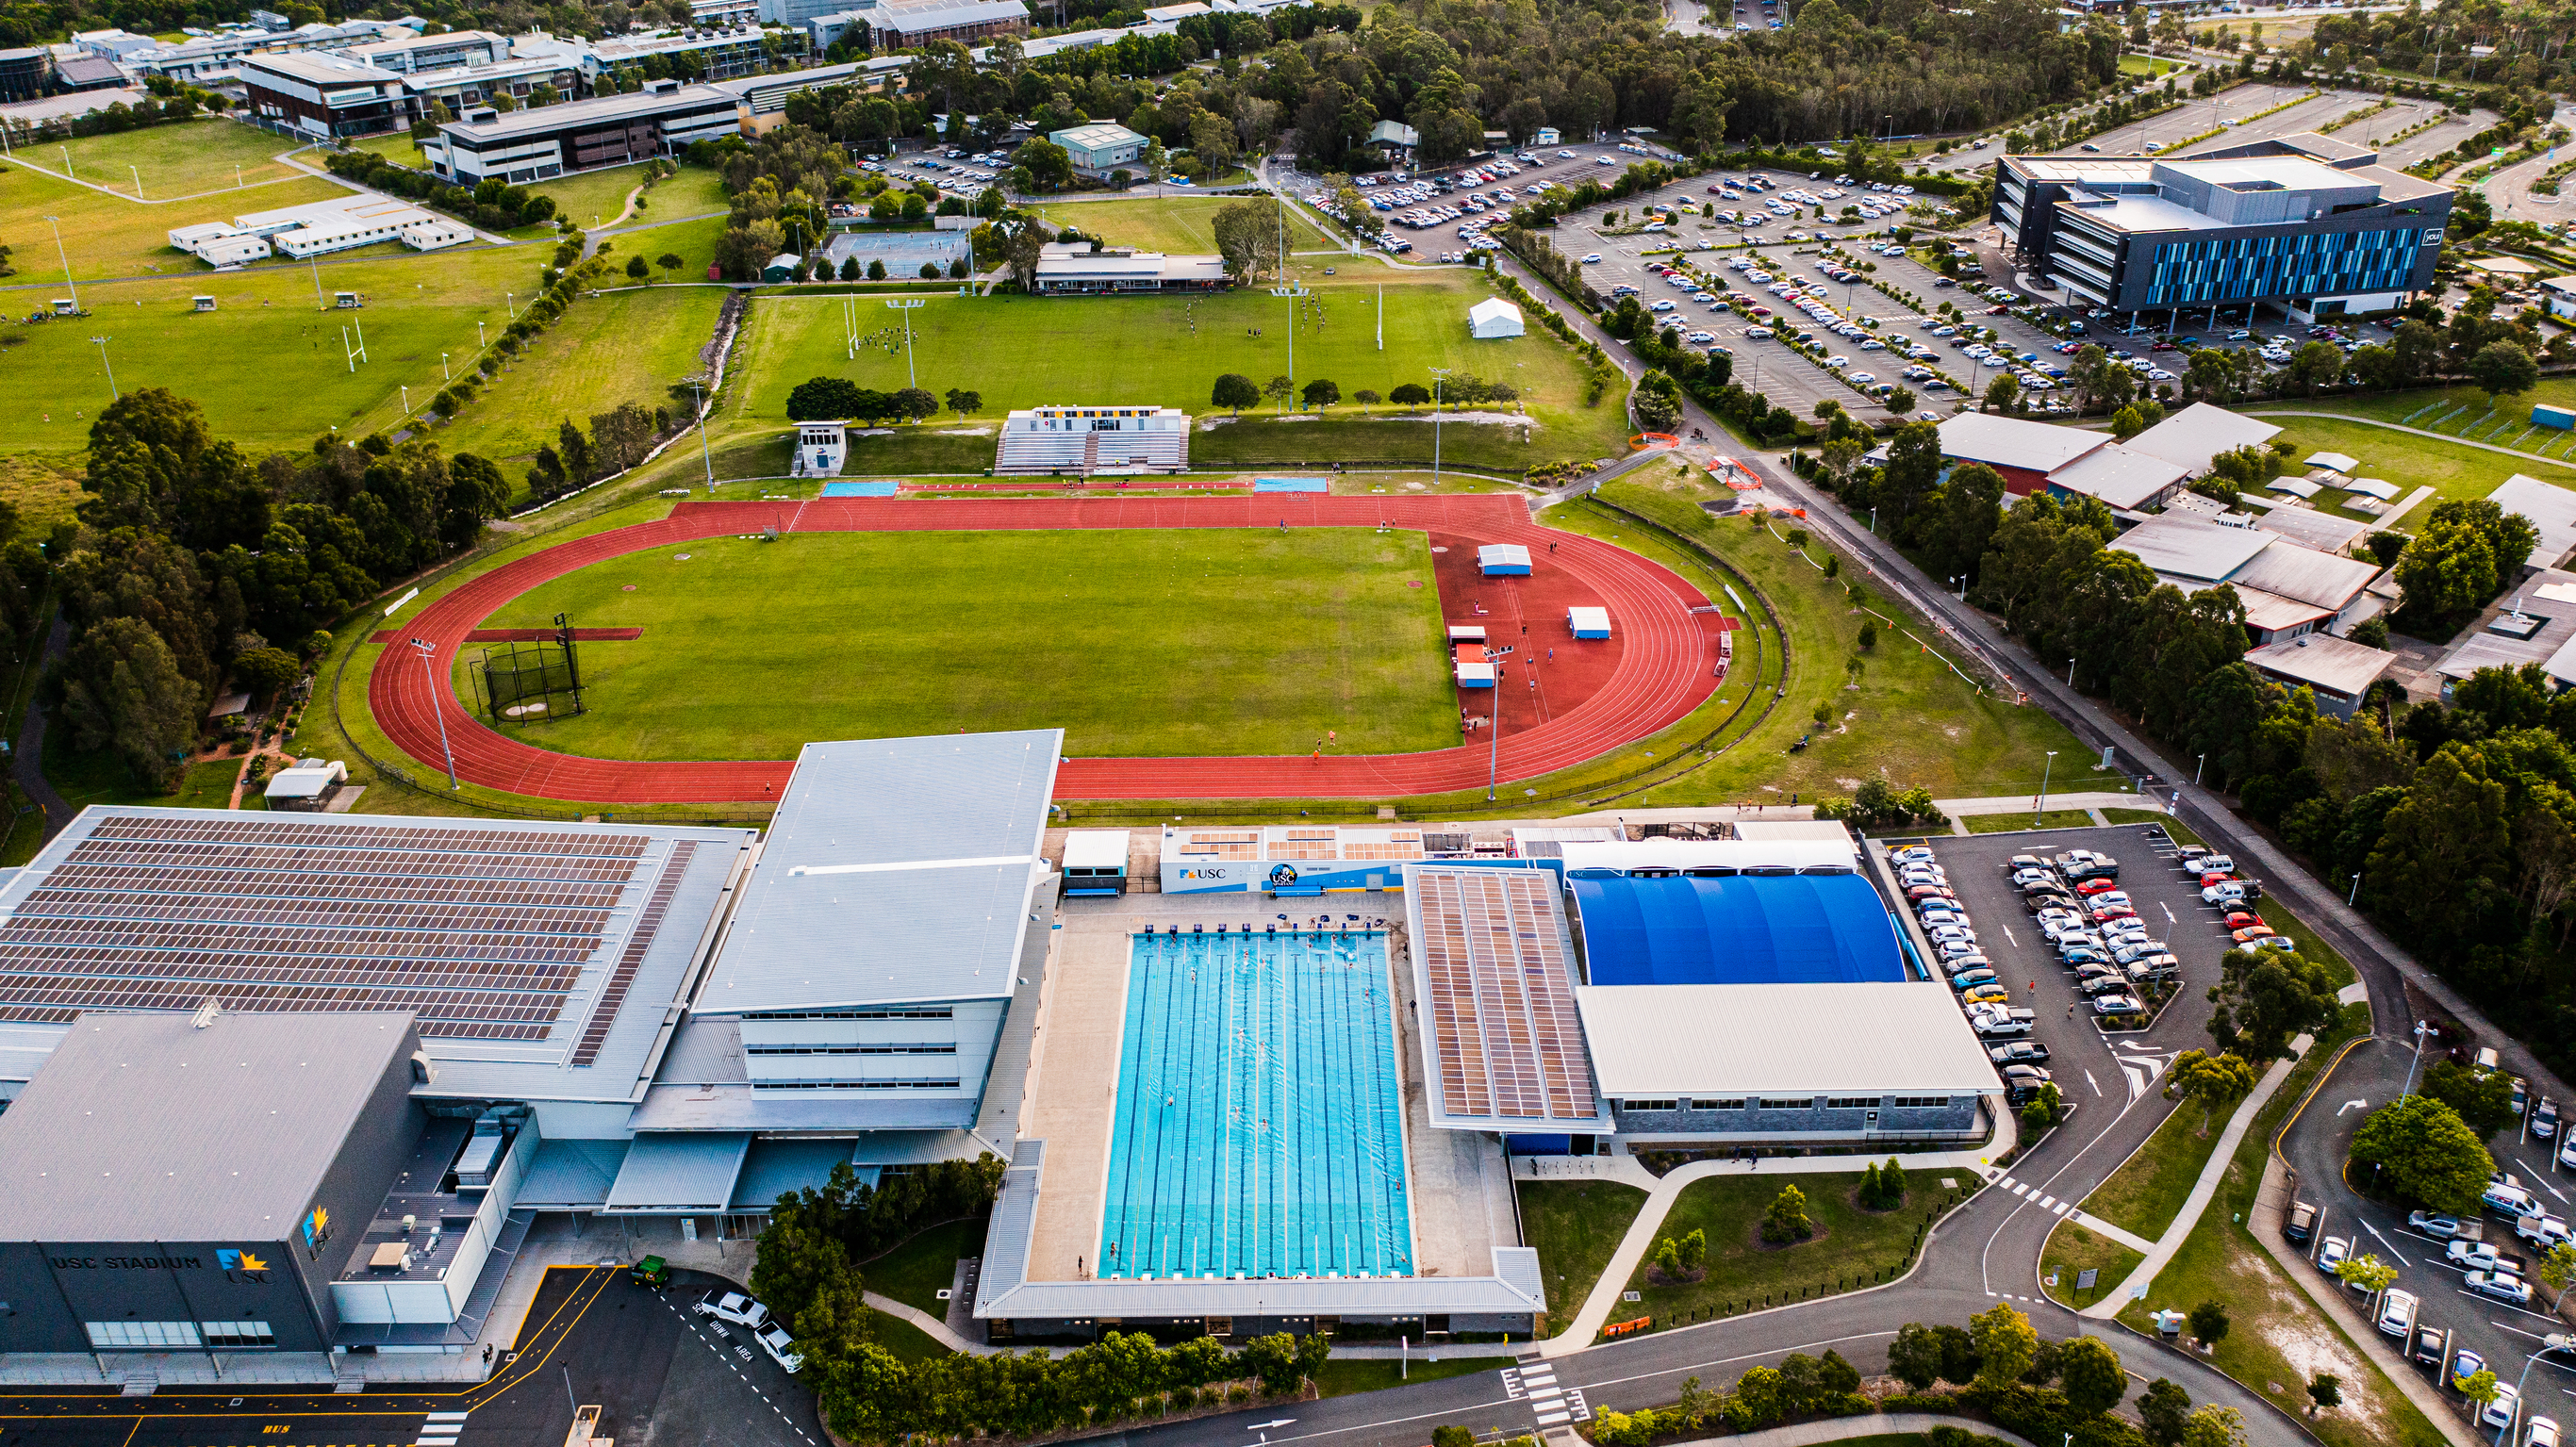 Drone aerial view of UniSC Sport precinct